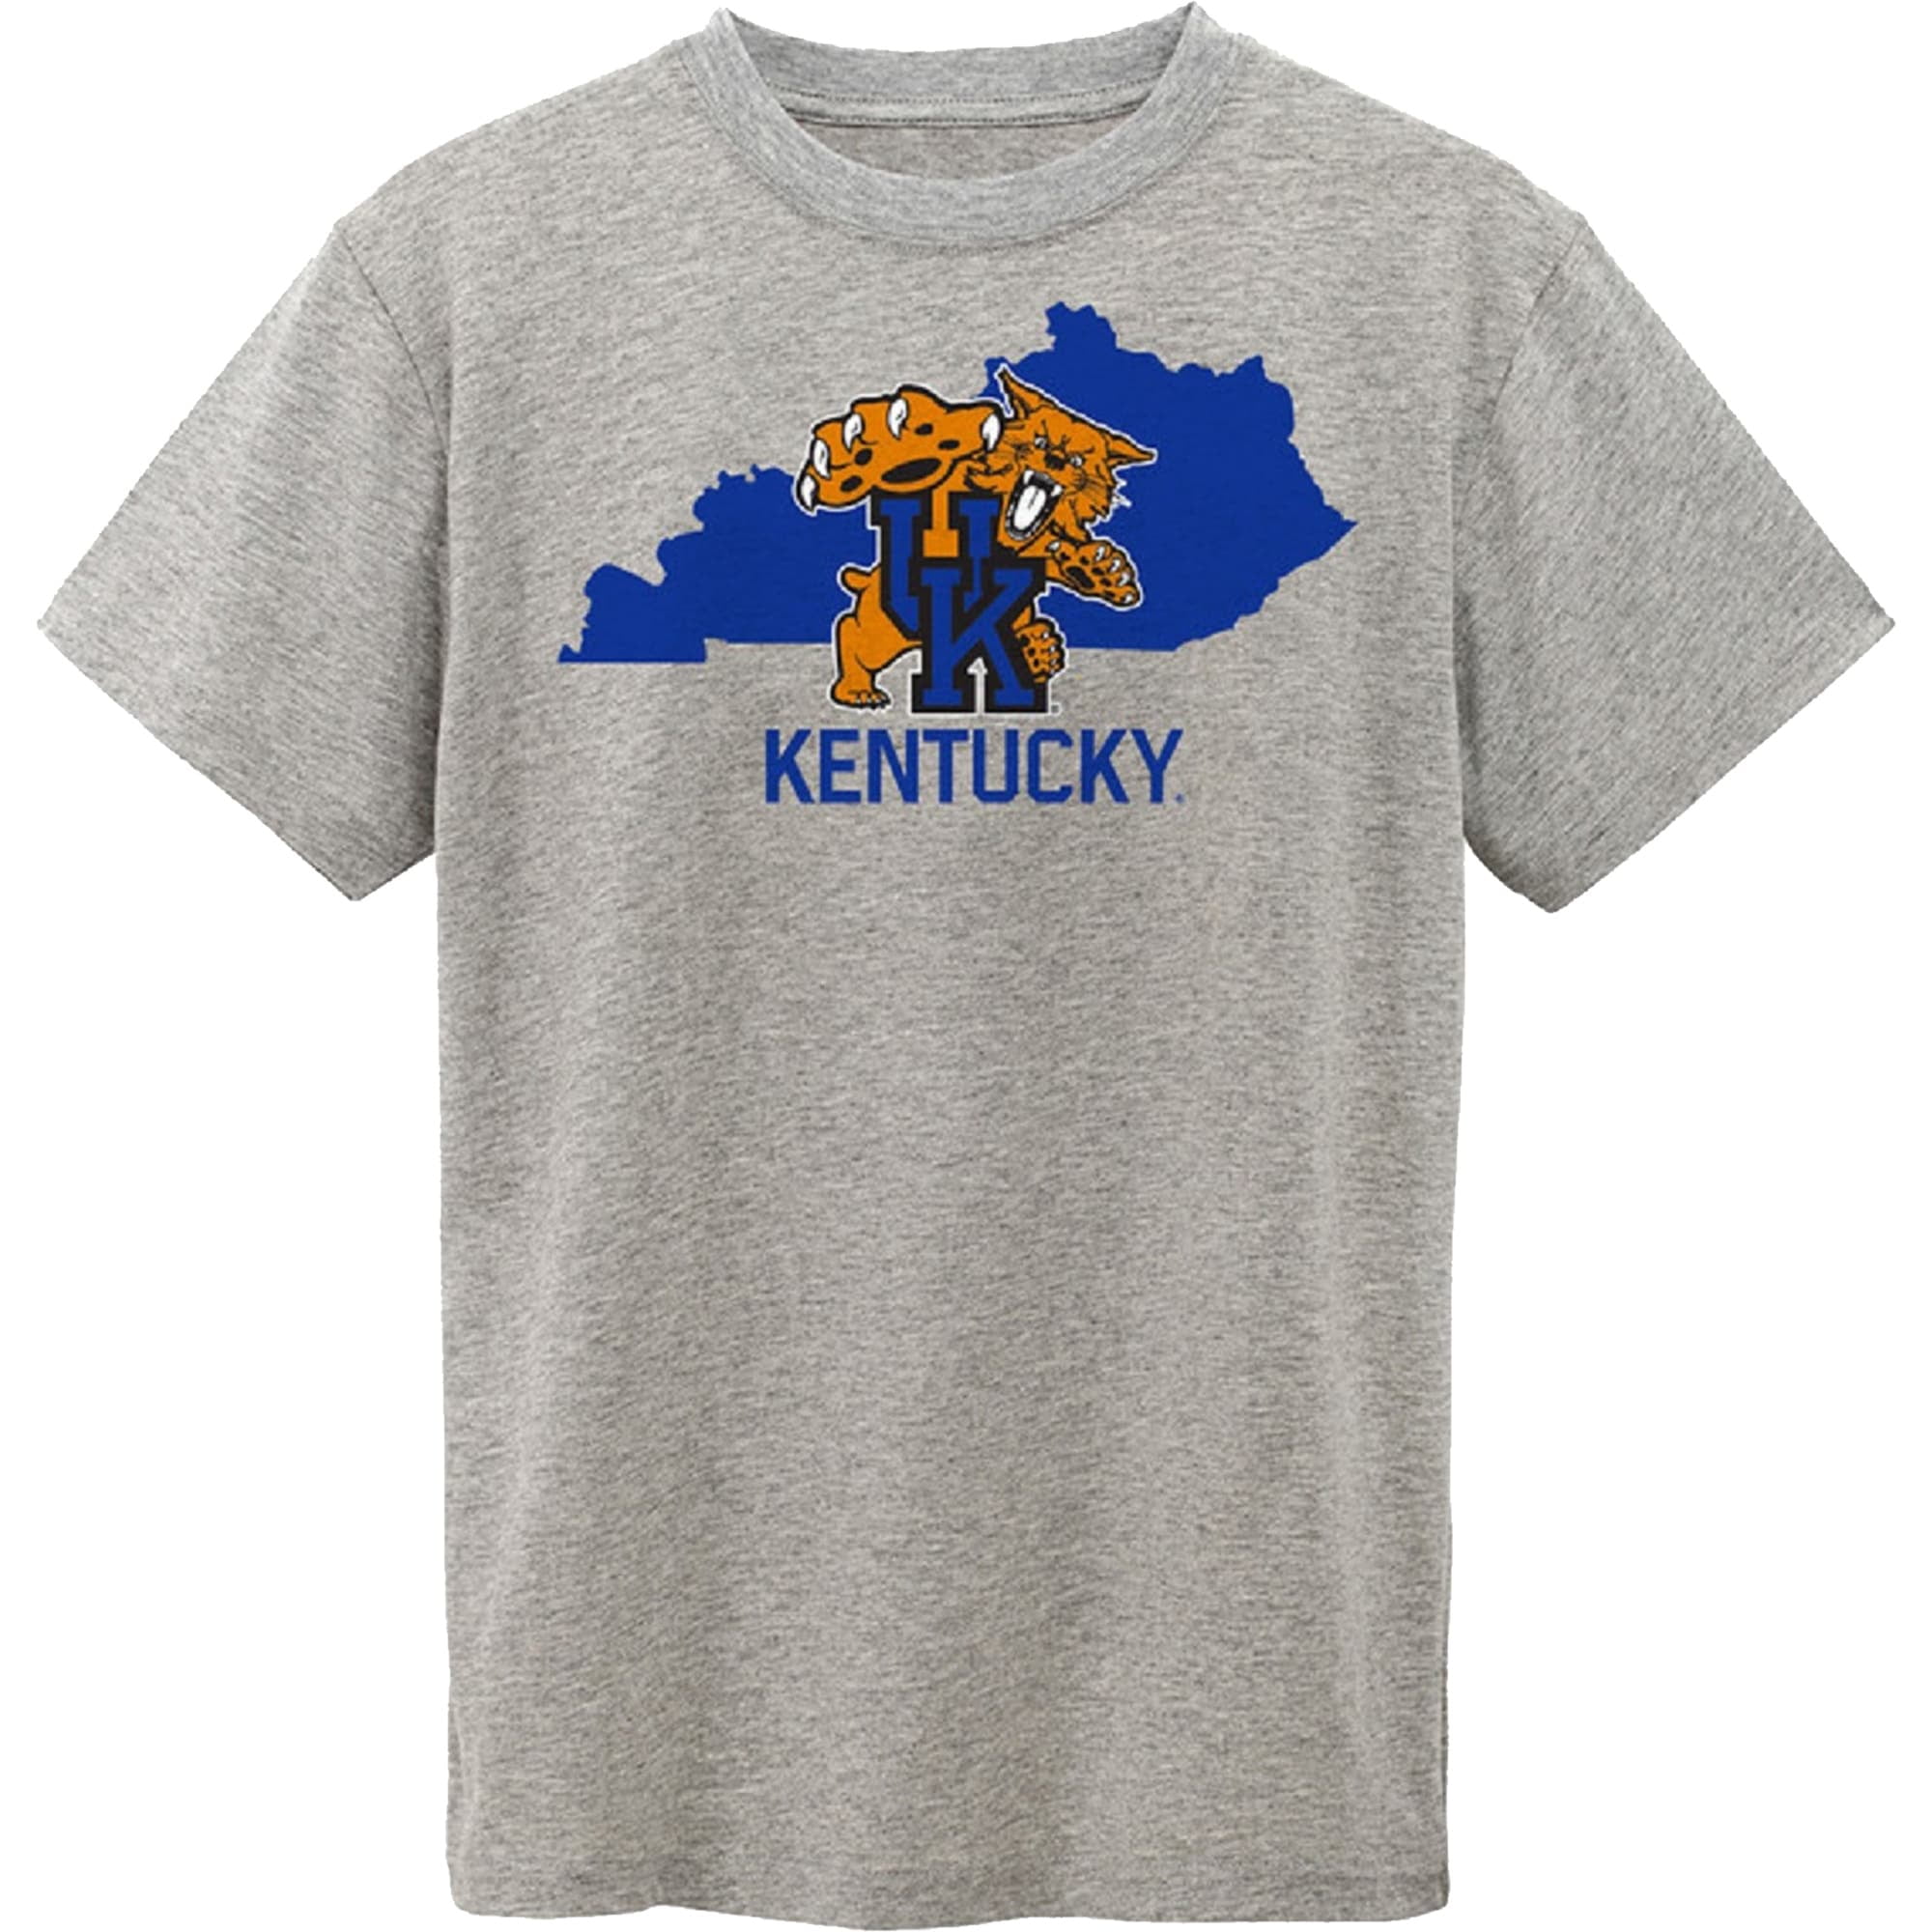 JollyRogerSkull KY Kentucky Map Louisville Flag Wildcats Home of University of Kentucky Girl Unisex Youth Kids T-Shirt Tee Clothing